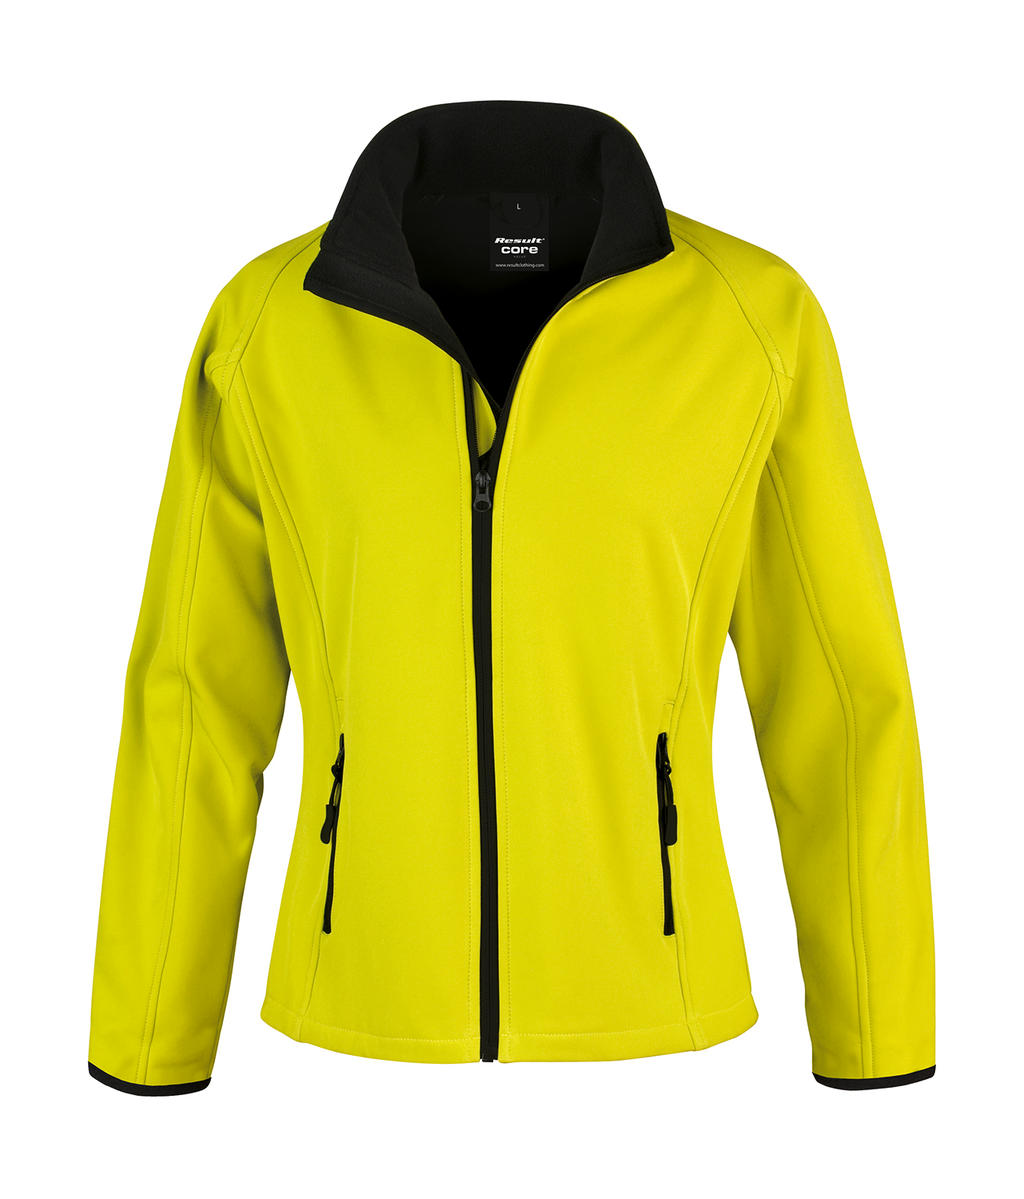  Ladies Printable Softshell Jacket in Farbe Yellow/Black